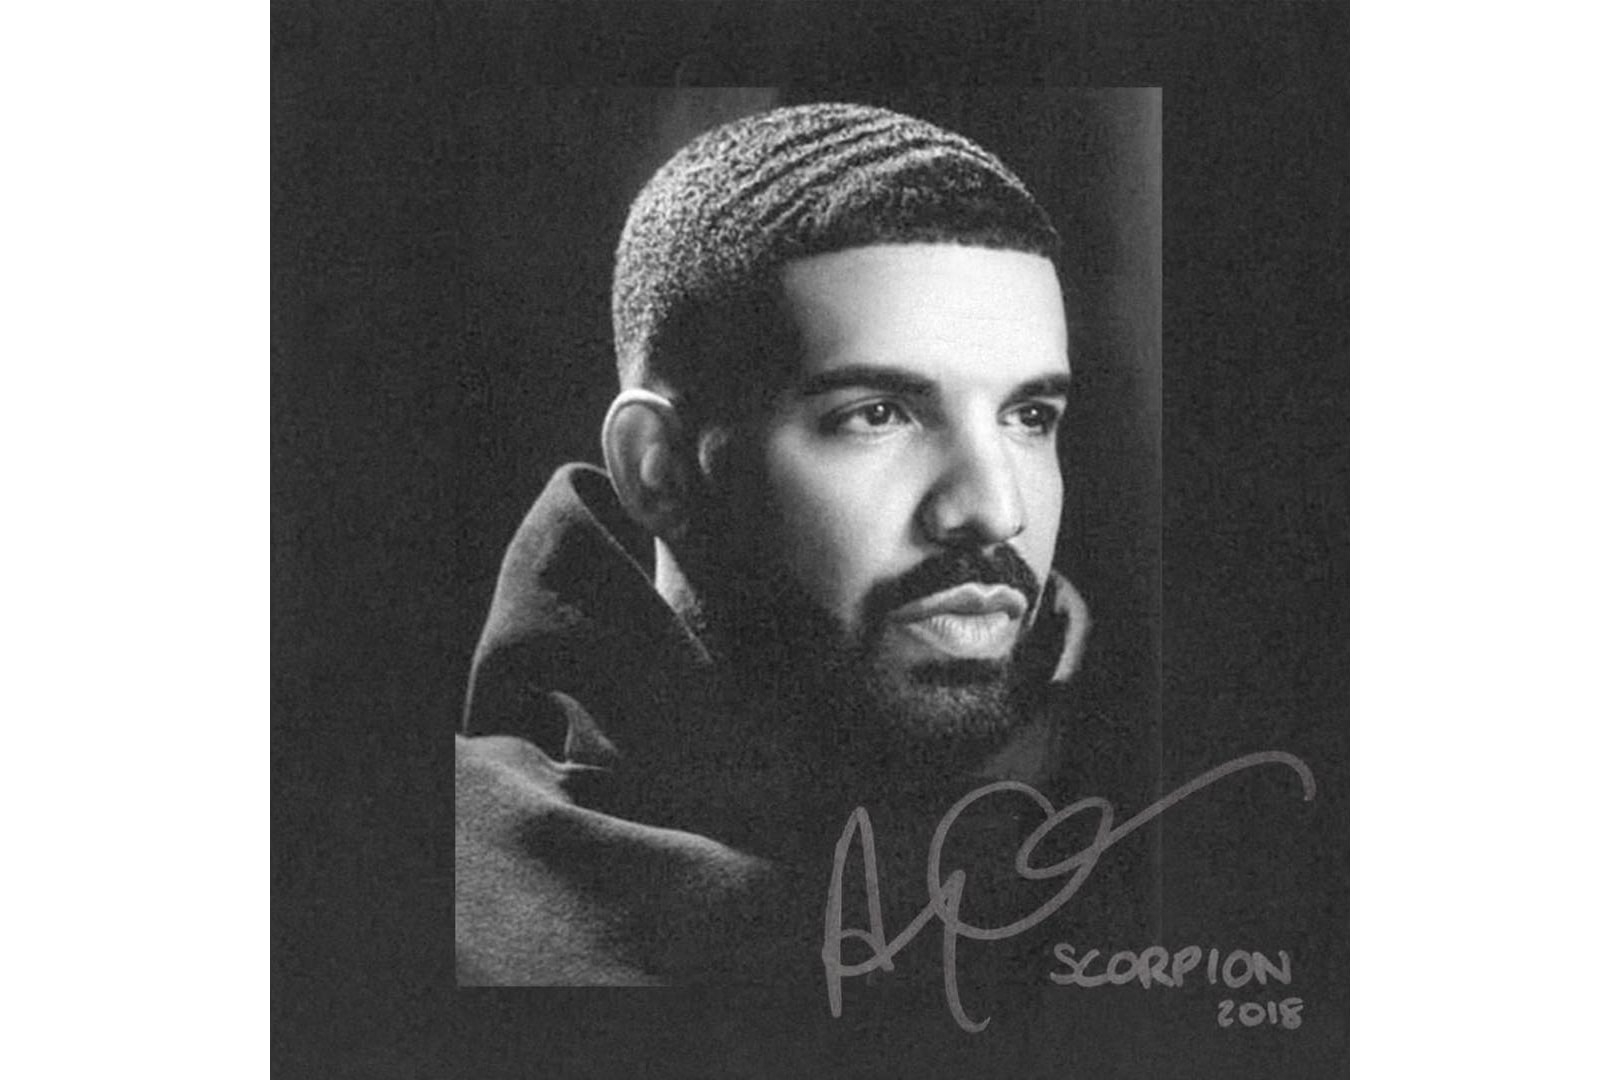 Drake Scorpion Album Cover Release Date June 29 2018